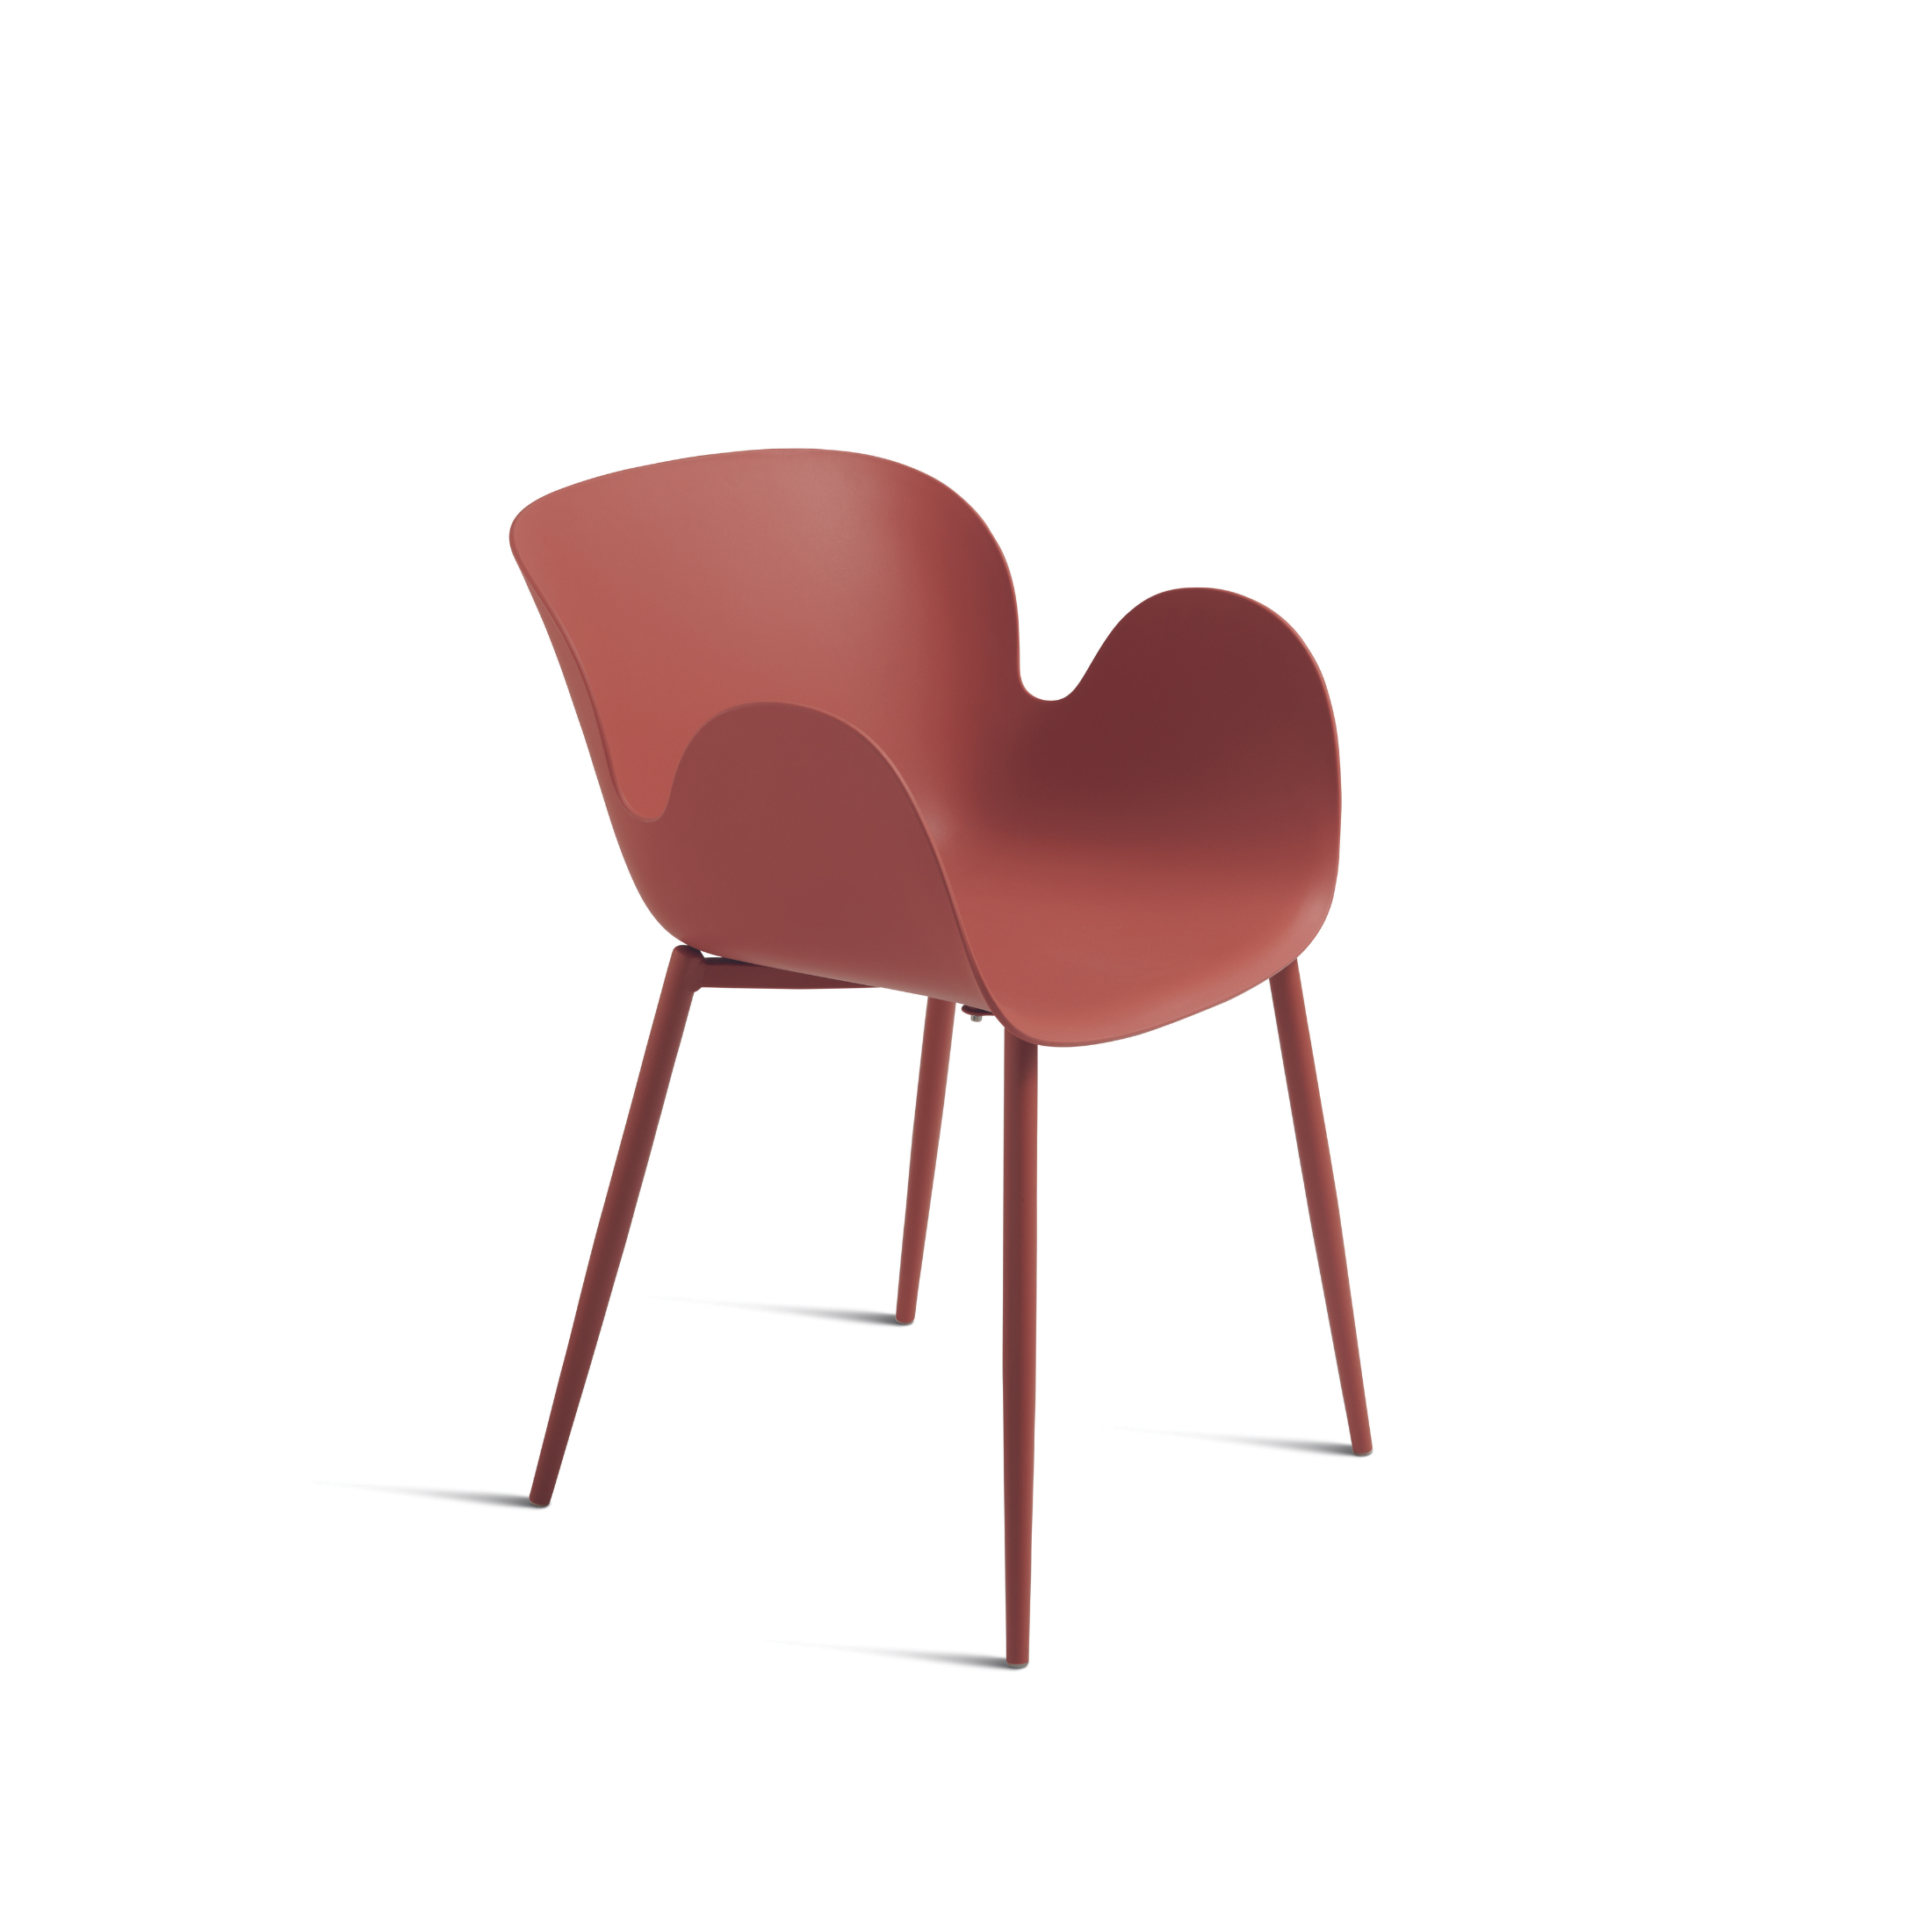 Set sedie moderne in polipropilene "Fluo" con struttura in metallo verniciato cm 53x56 h80